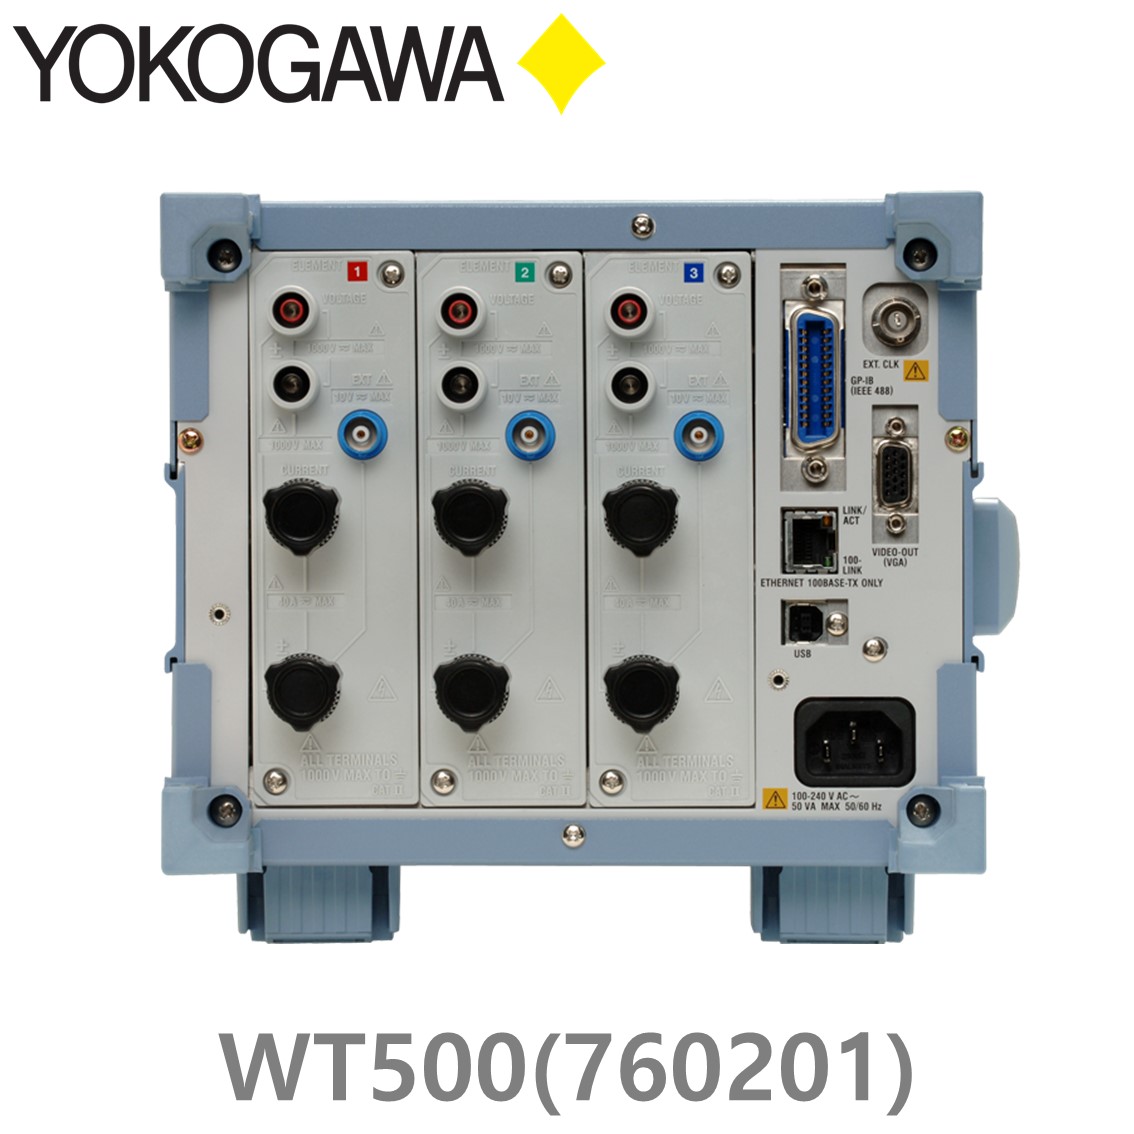 [ YOKOGAWA ] WT500(760201) Power Analyzer, 요꼬가와 전력분석계